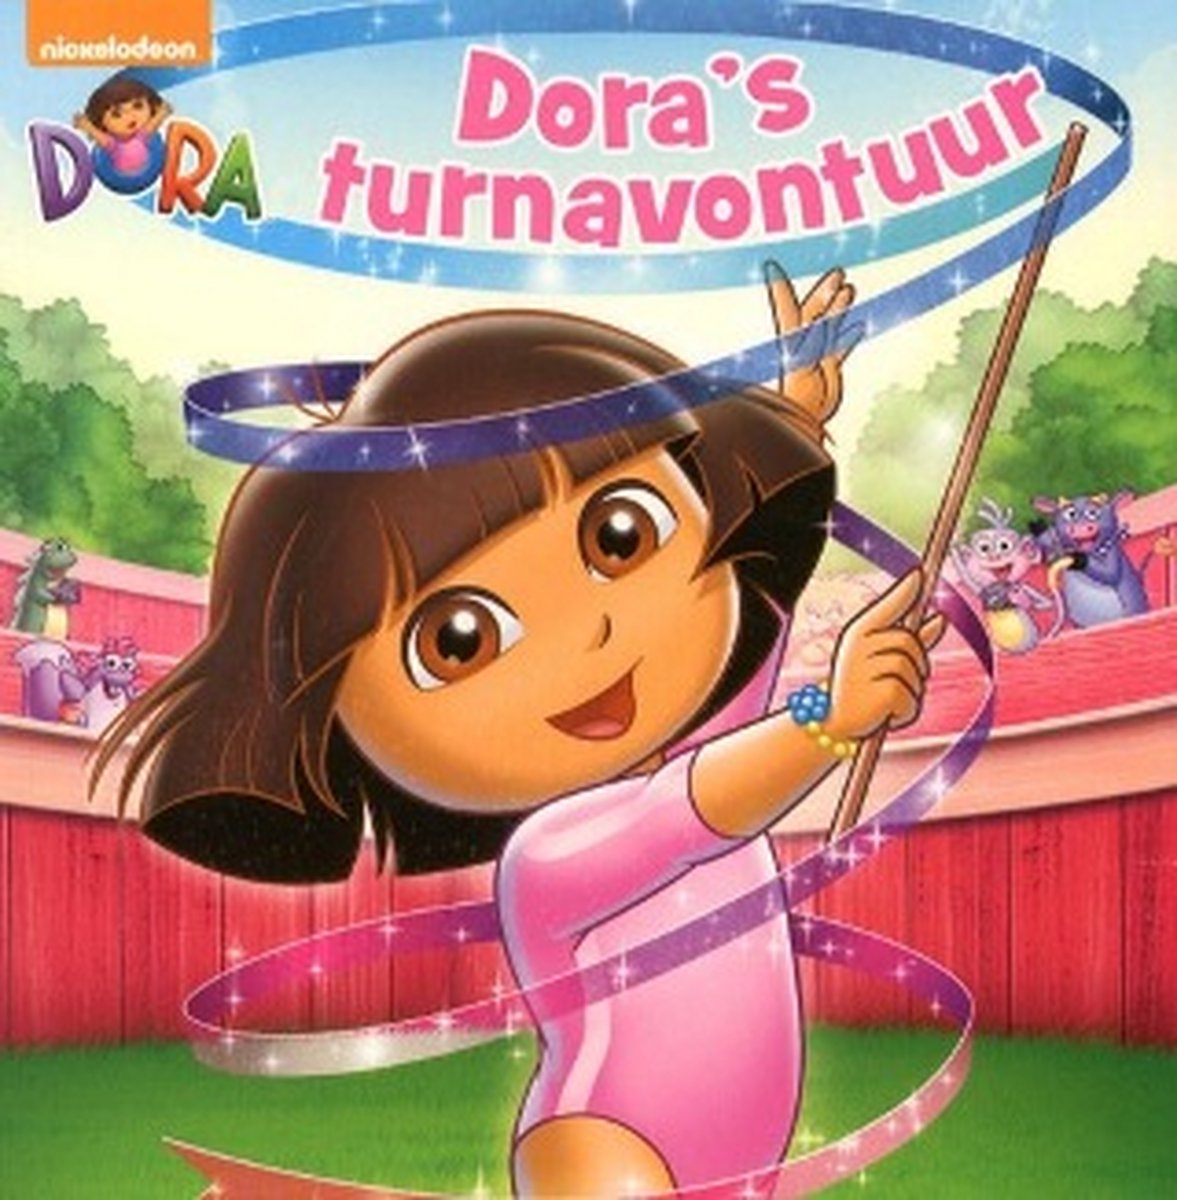 Dora's turnavontuur